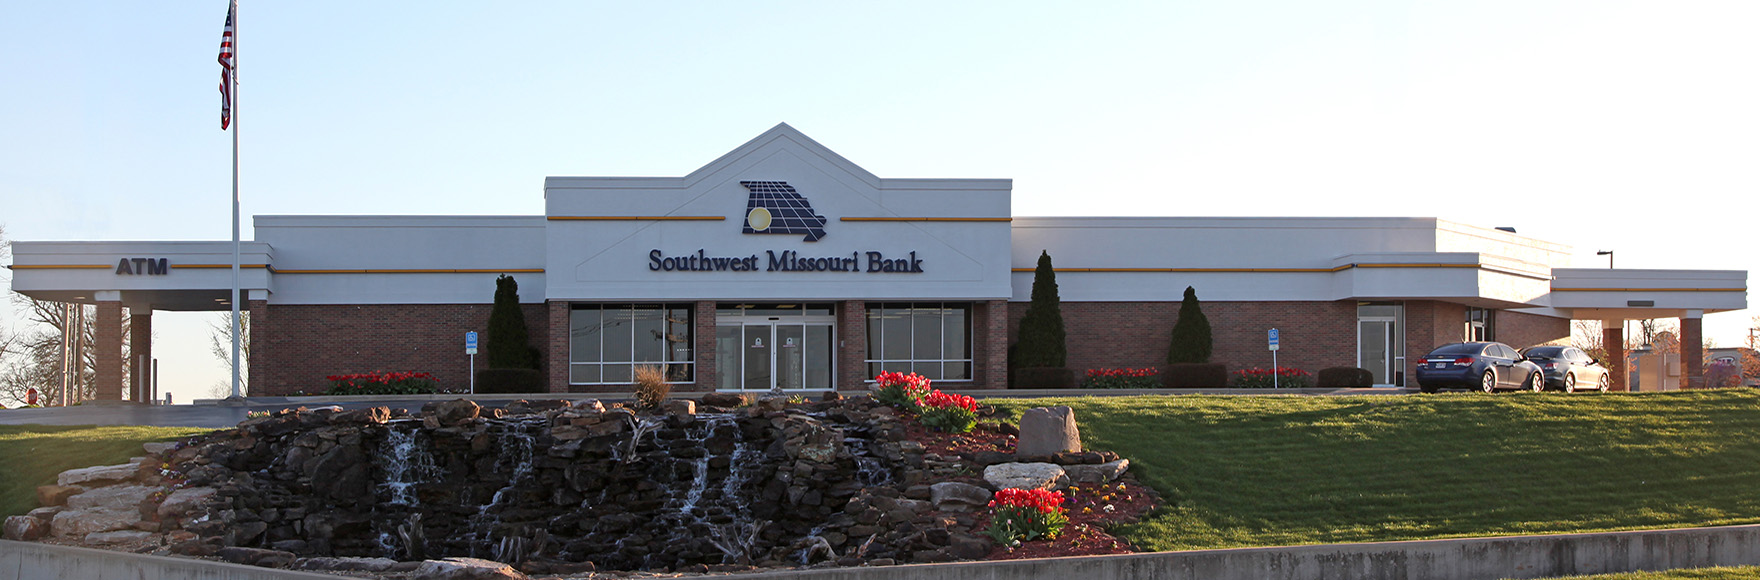 southwest missouri bank front view